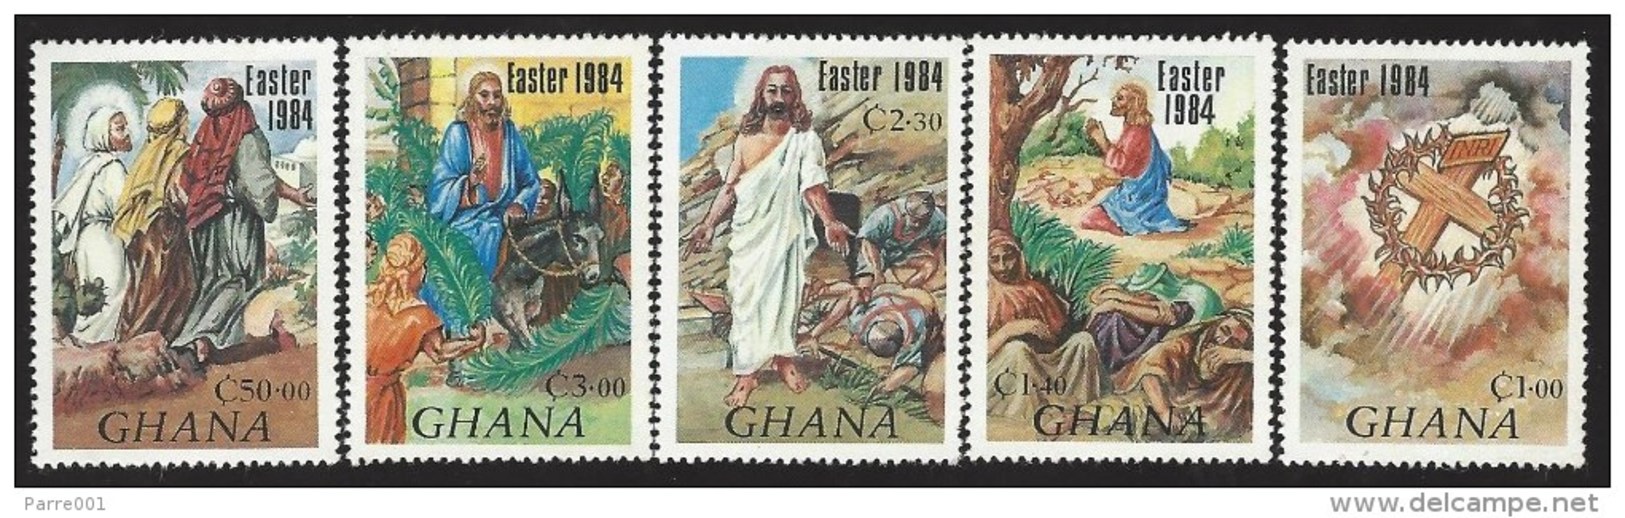 Ghana 1984 Easter Christ Crusifiction MNH Set - Ghana (1957-...)